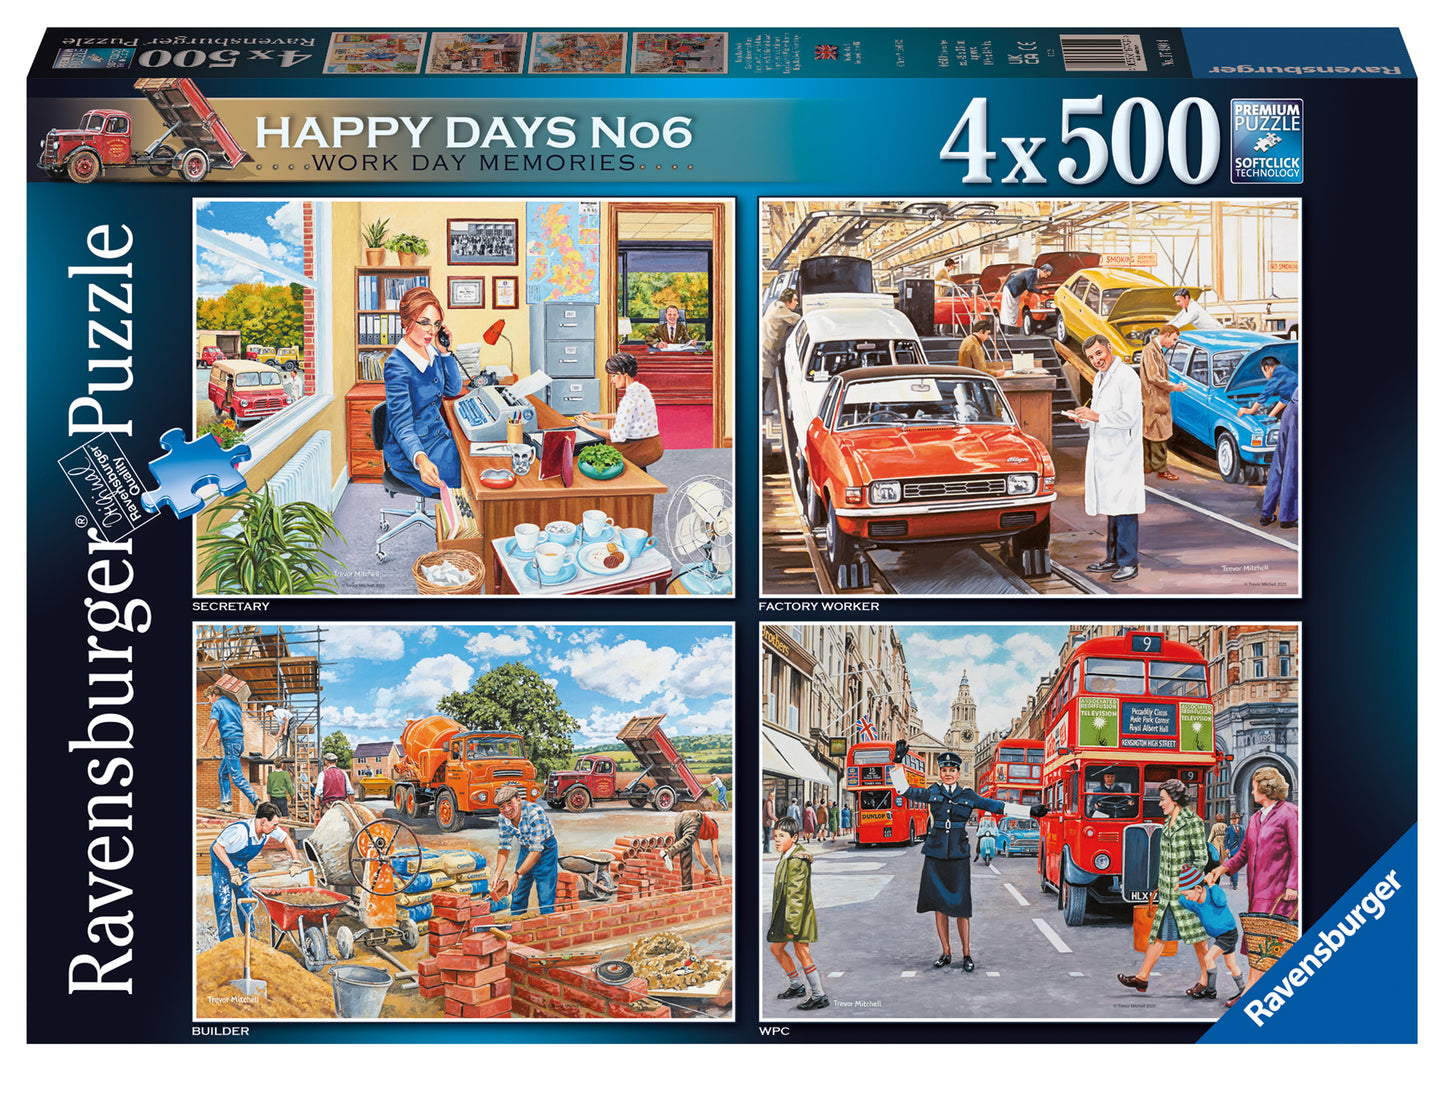 Ravensburger - Happy Days No 6, Work Day Memories - 4 x 500 Piece Jigsaw Puzzles